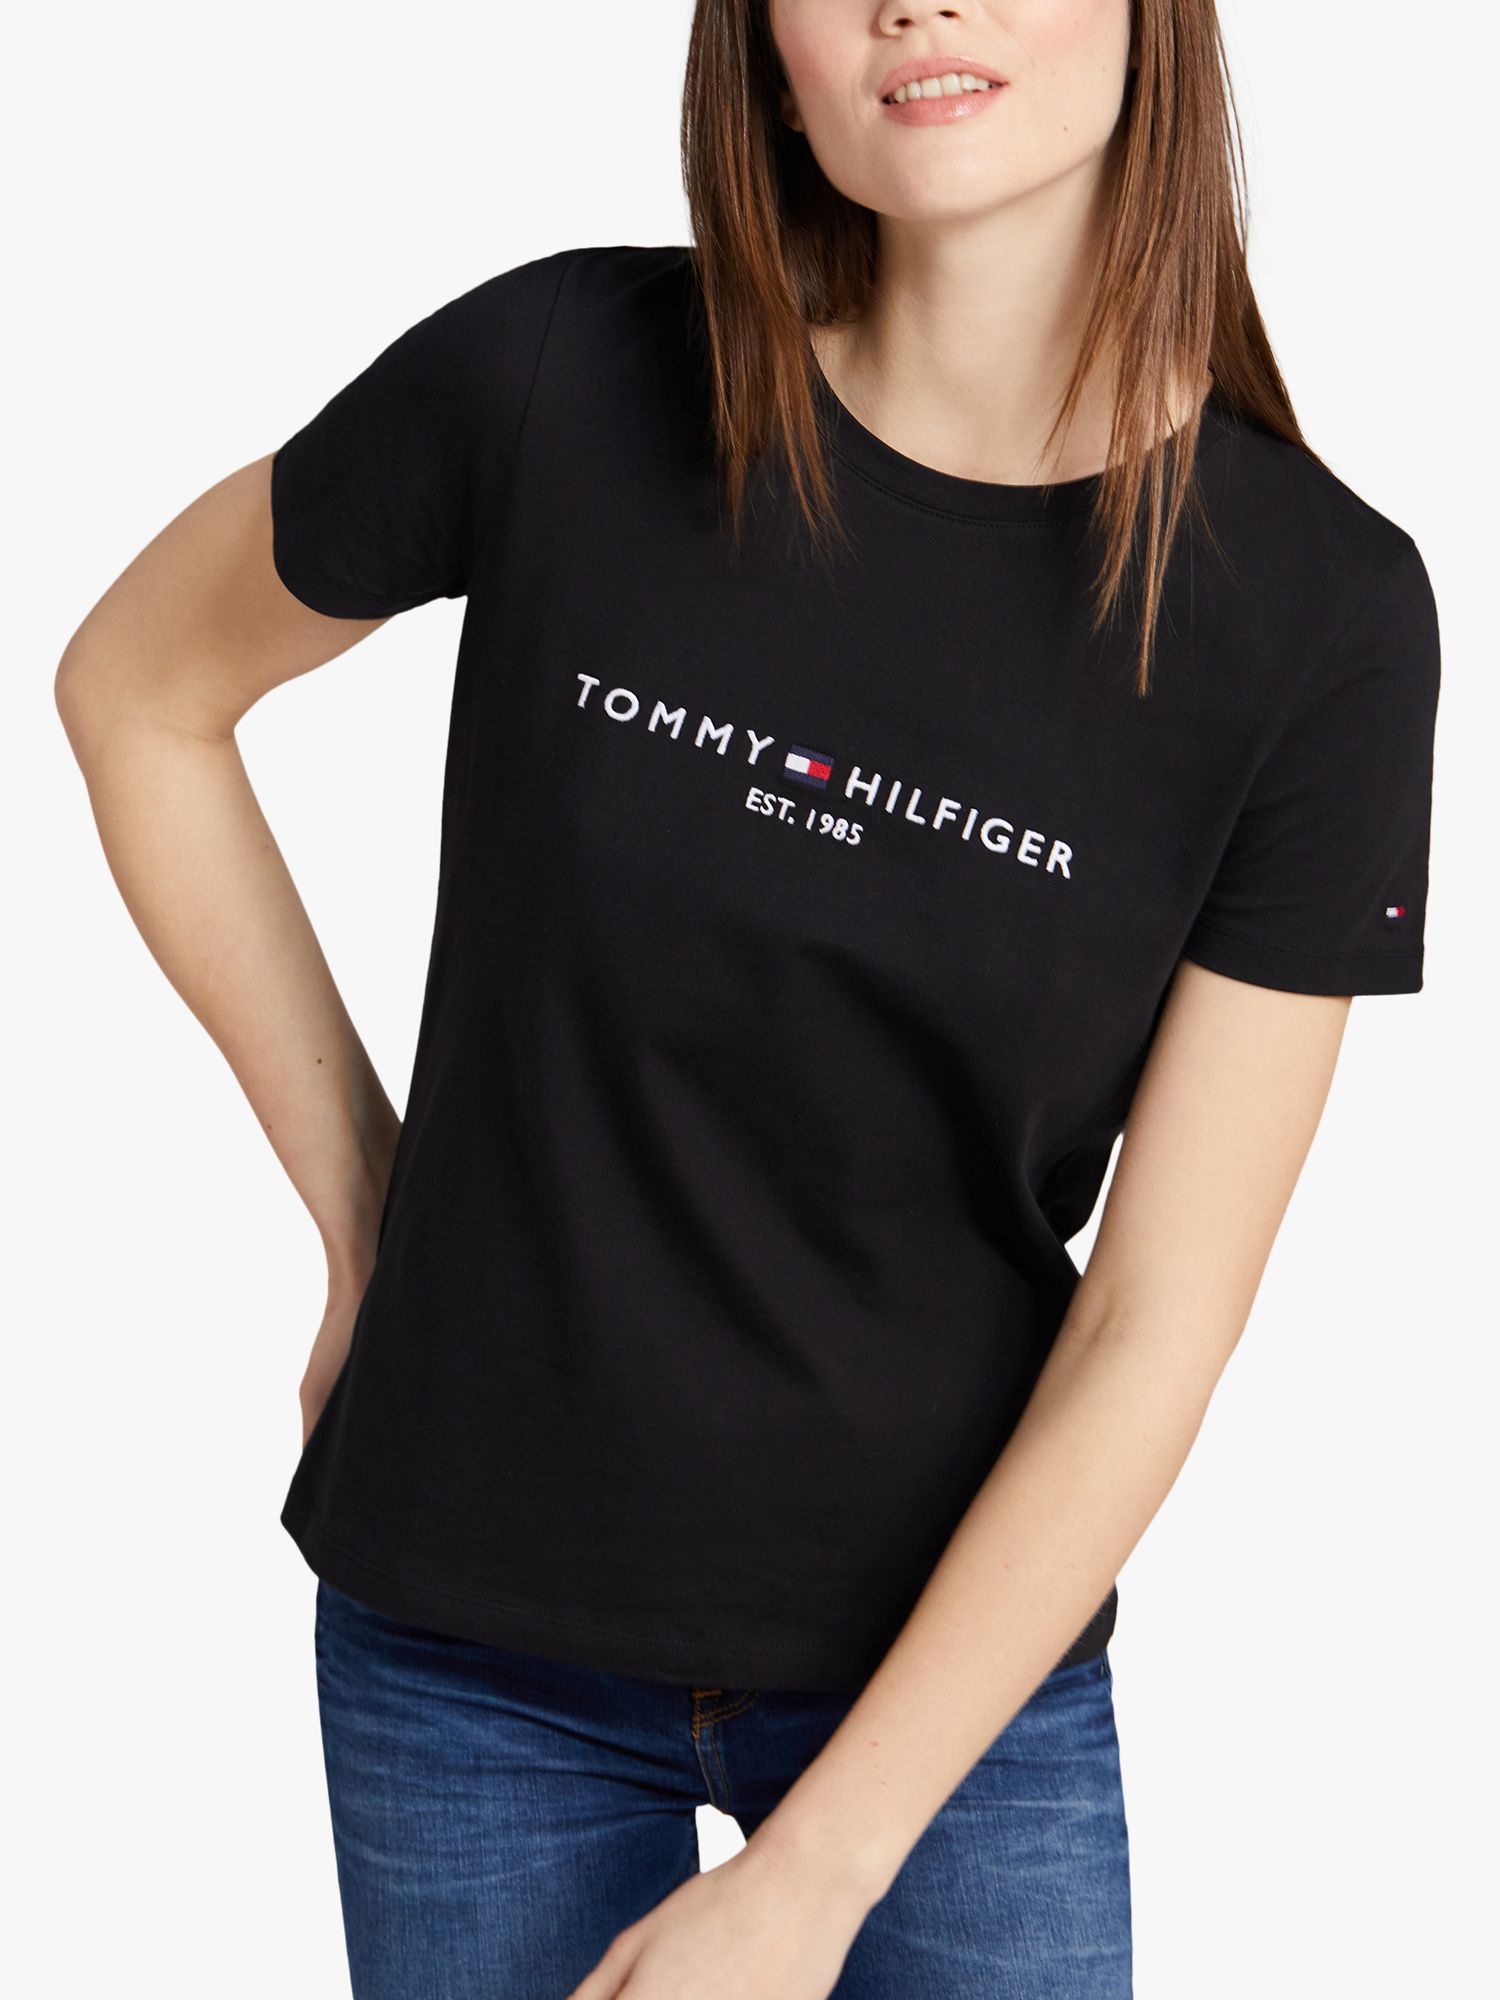 Tommy Hilfiger Women's Performance T-Shirt – Lightweight Cotton Graphic Tees